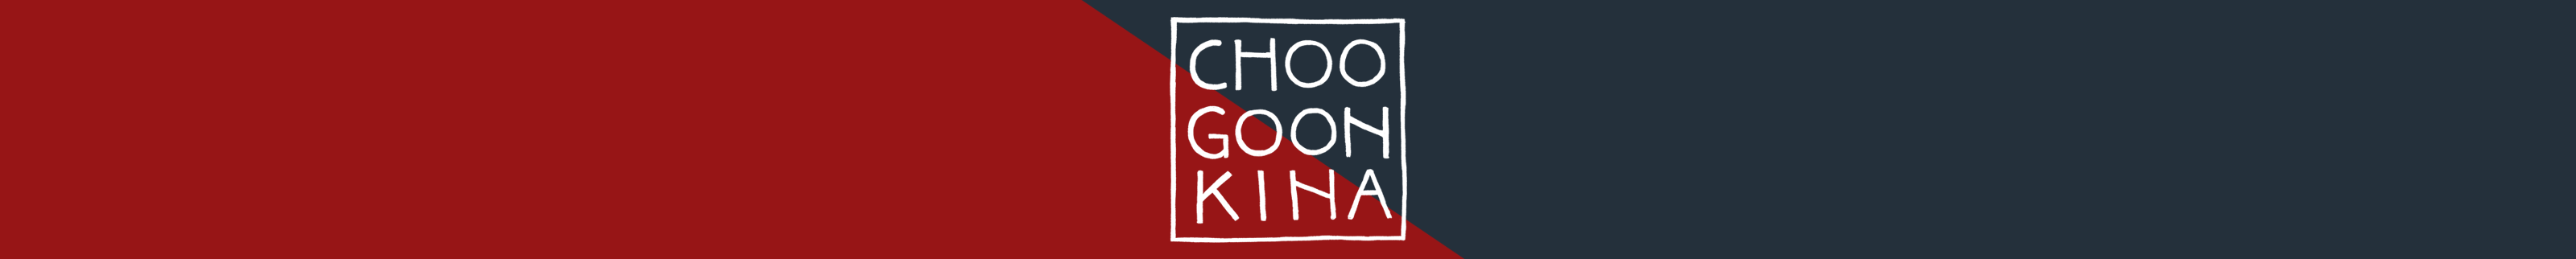 Banner profilu uživatele Kato Choogoonkina